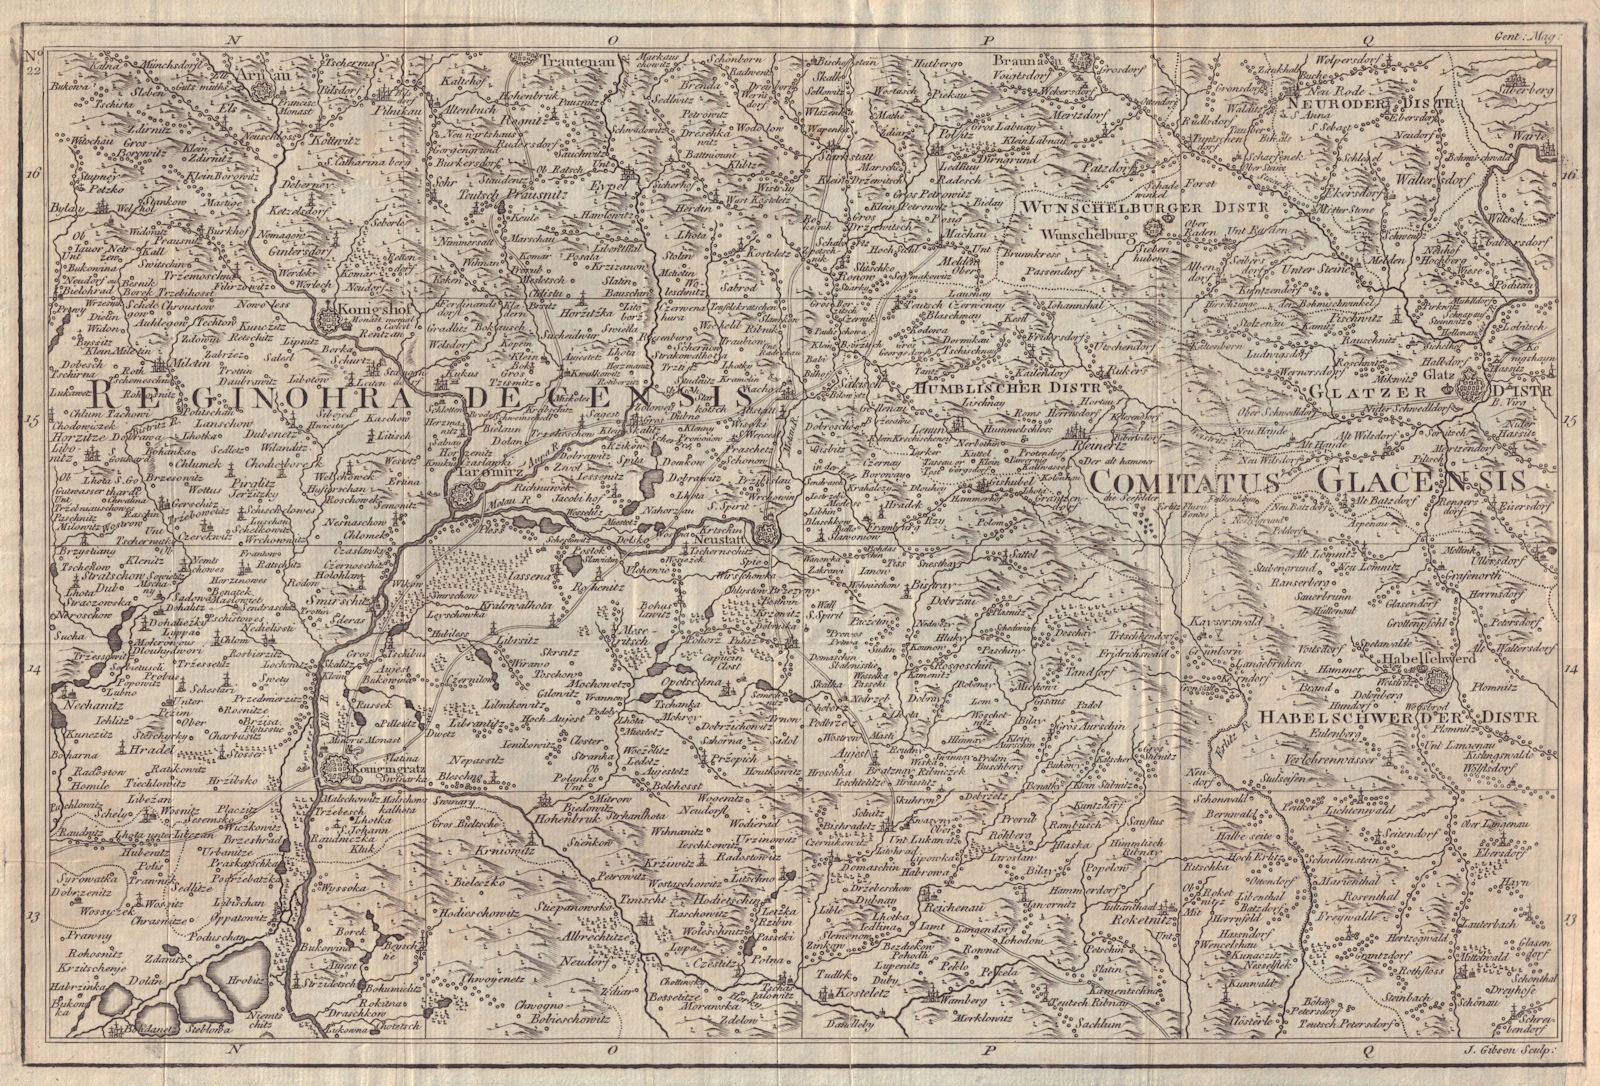 Associate Product Czechia/Silesia. Hradec Kralove Jaromer Klodzko Nove Mesto. GIBSON 1762 map